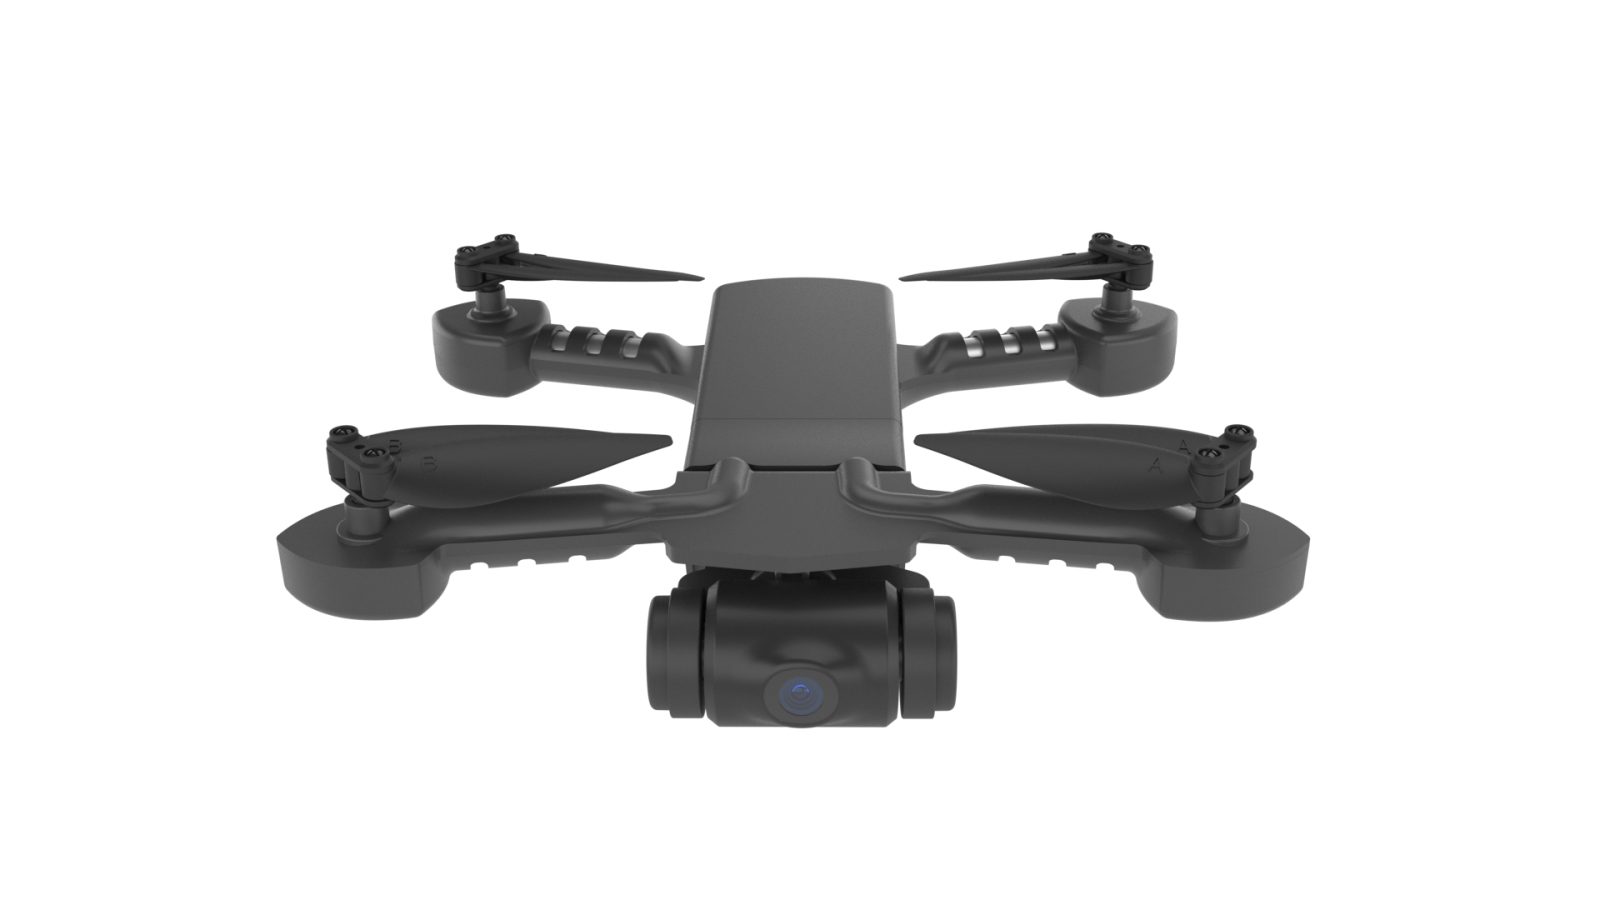 micro drone 4.0 update